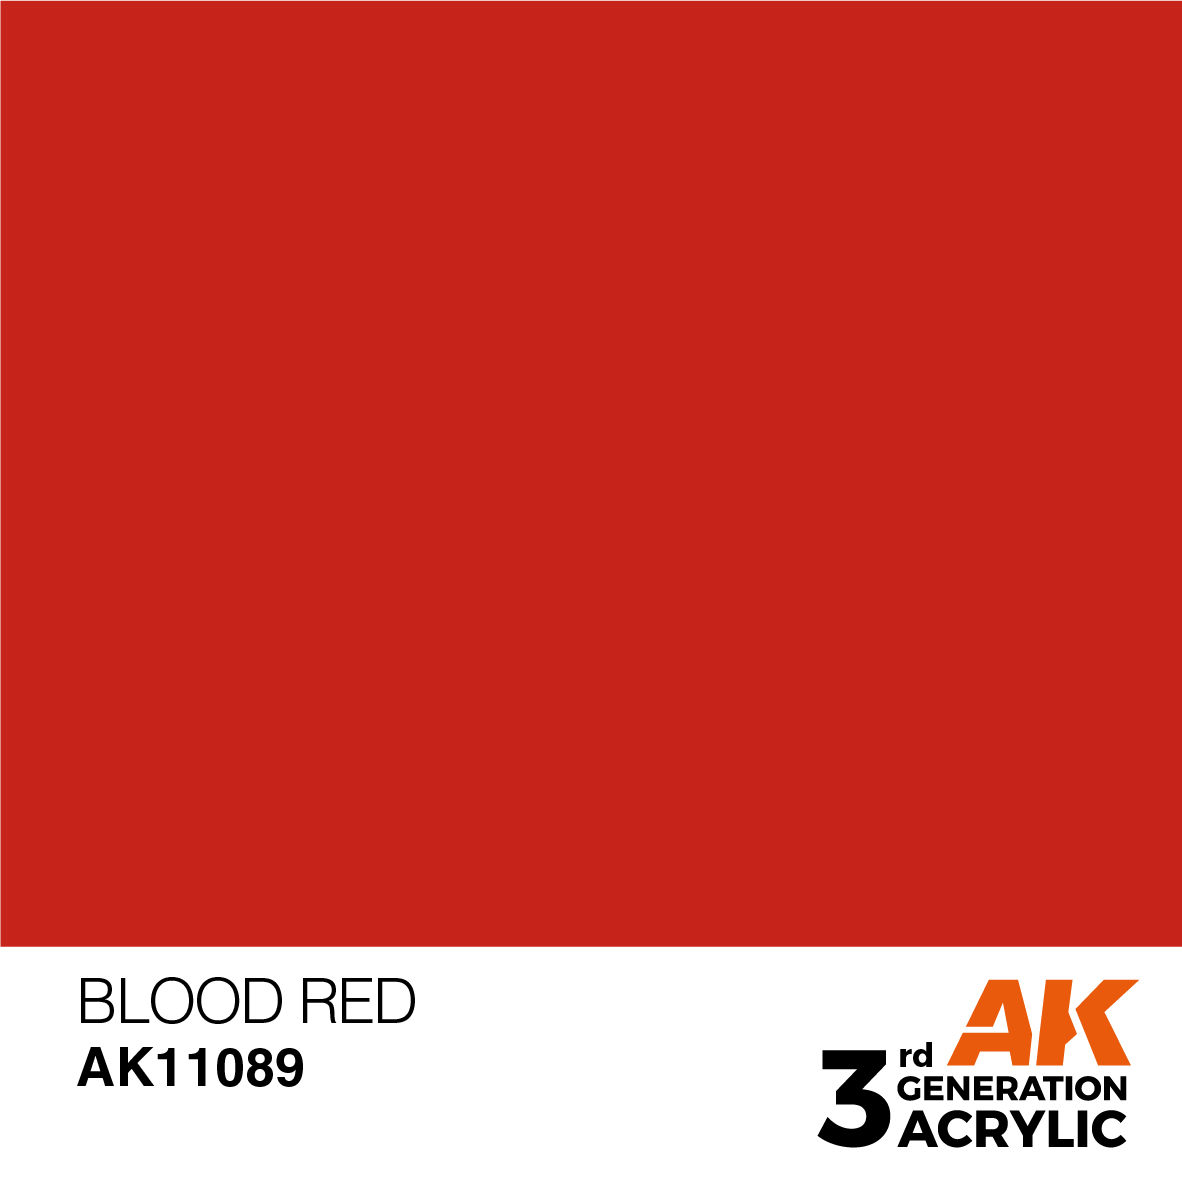 BLOOD RED – STANDARD